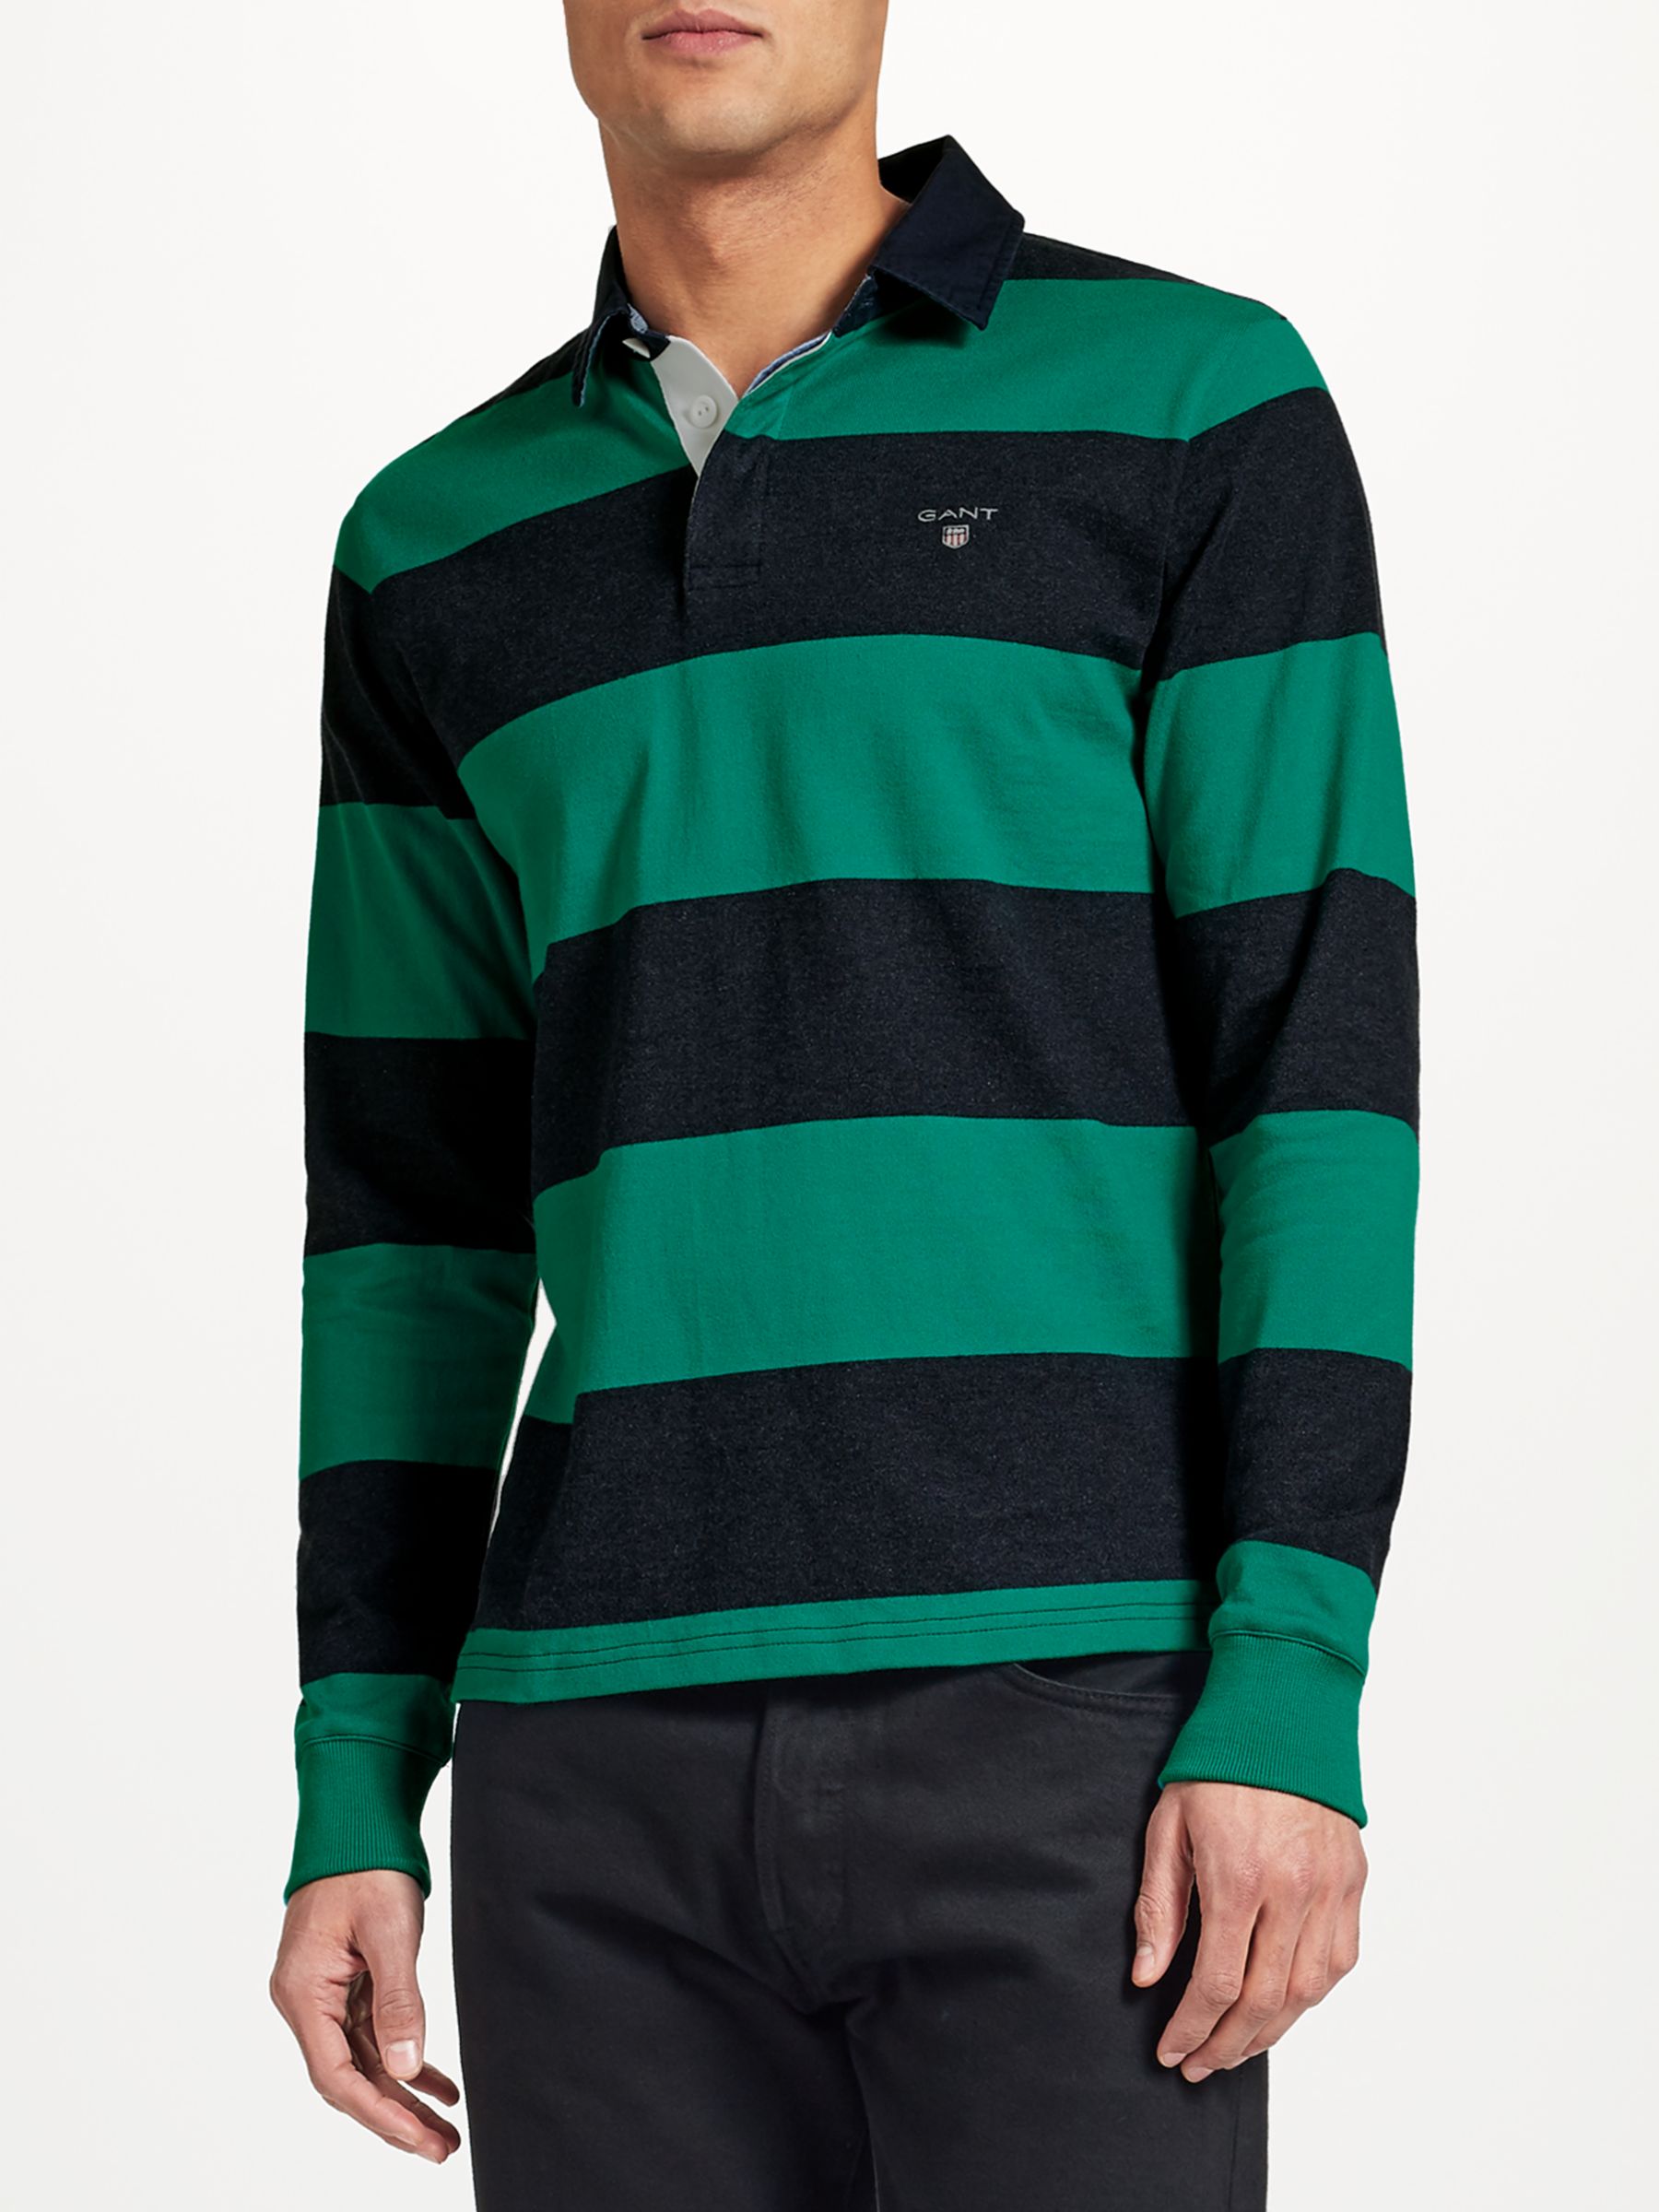 GANT Rugger Bar Stripe Heavy Jersey Rugby Shirt, Emerald Green, M